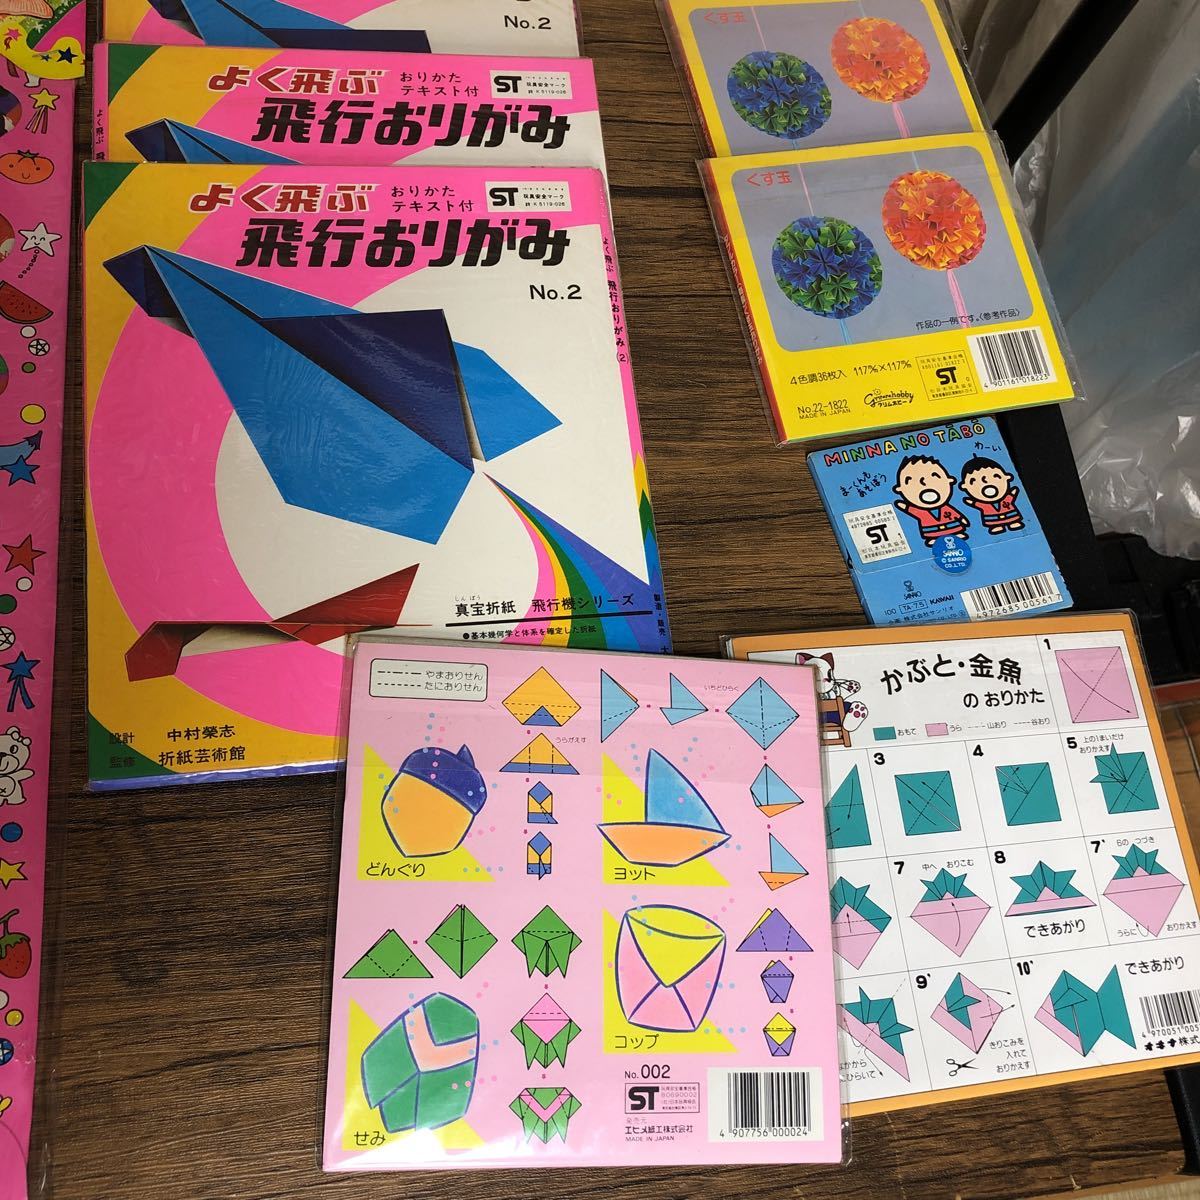  Showa Retro оригами оригами полет оригами .. шар оригами 7 .. комплект 